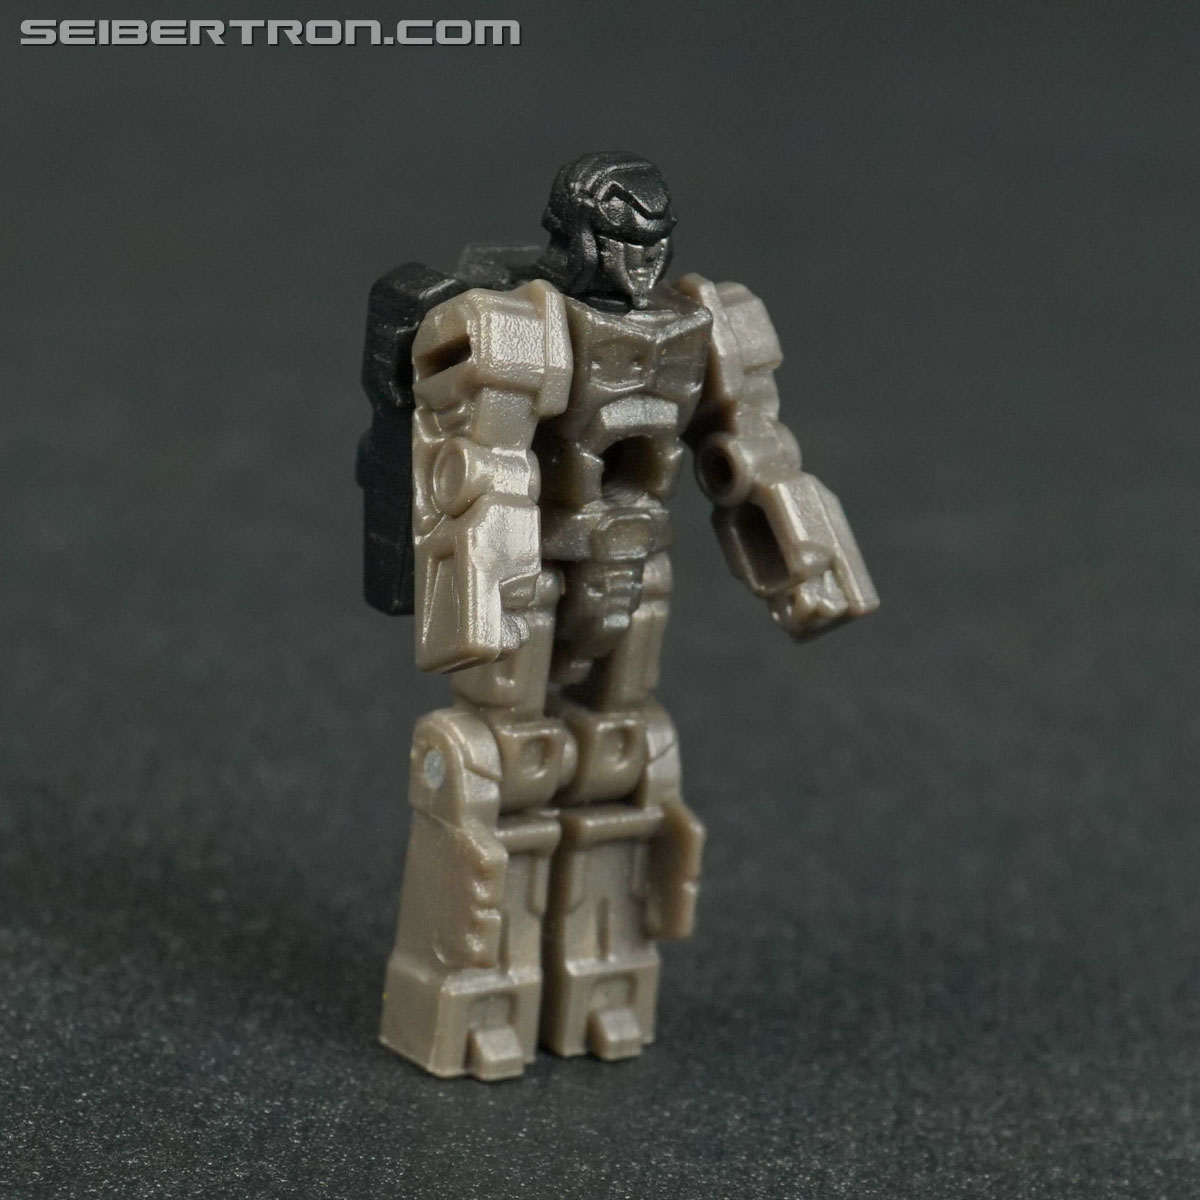 Transformers Legends Headmaster Black Convoy (Image #8 of 37)